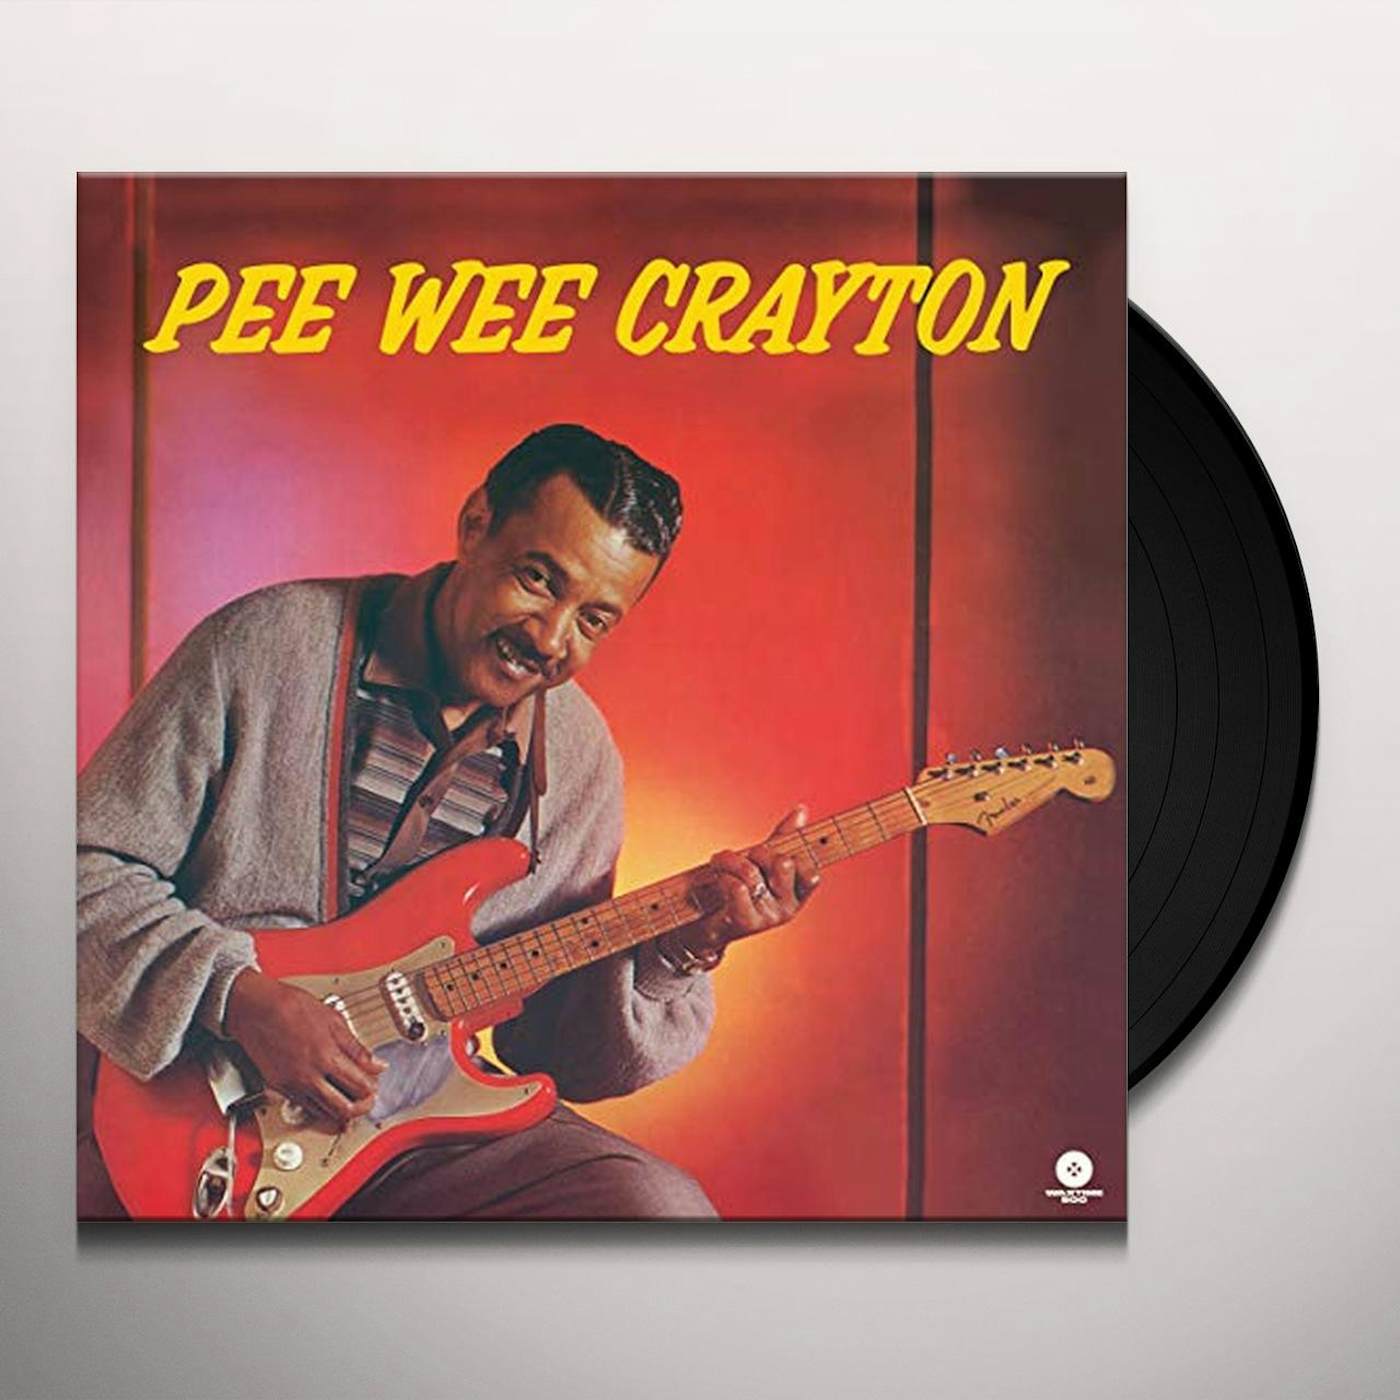 Pee Wee Crayton 1960 DEBUT ALBUM (AUDP) (BONUS TRACKS) Vinyl Record - Limited Edition, 180 Gram Pressing